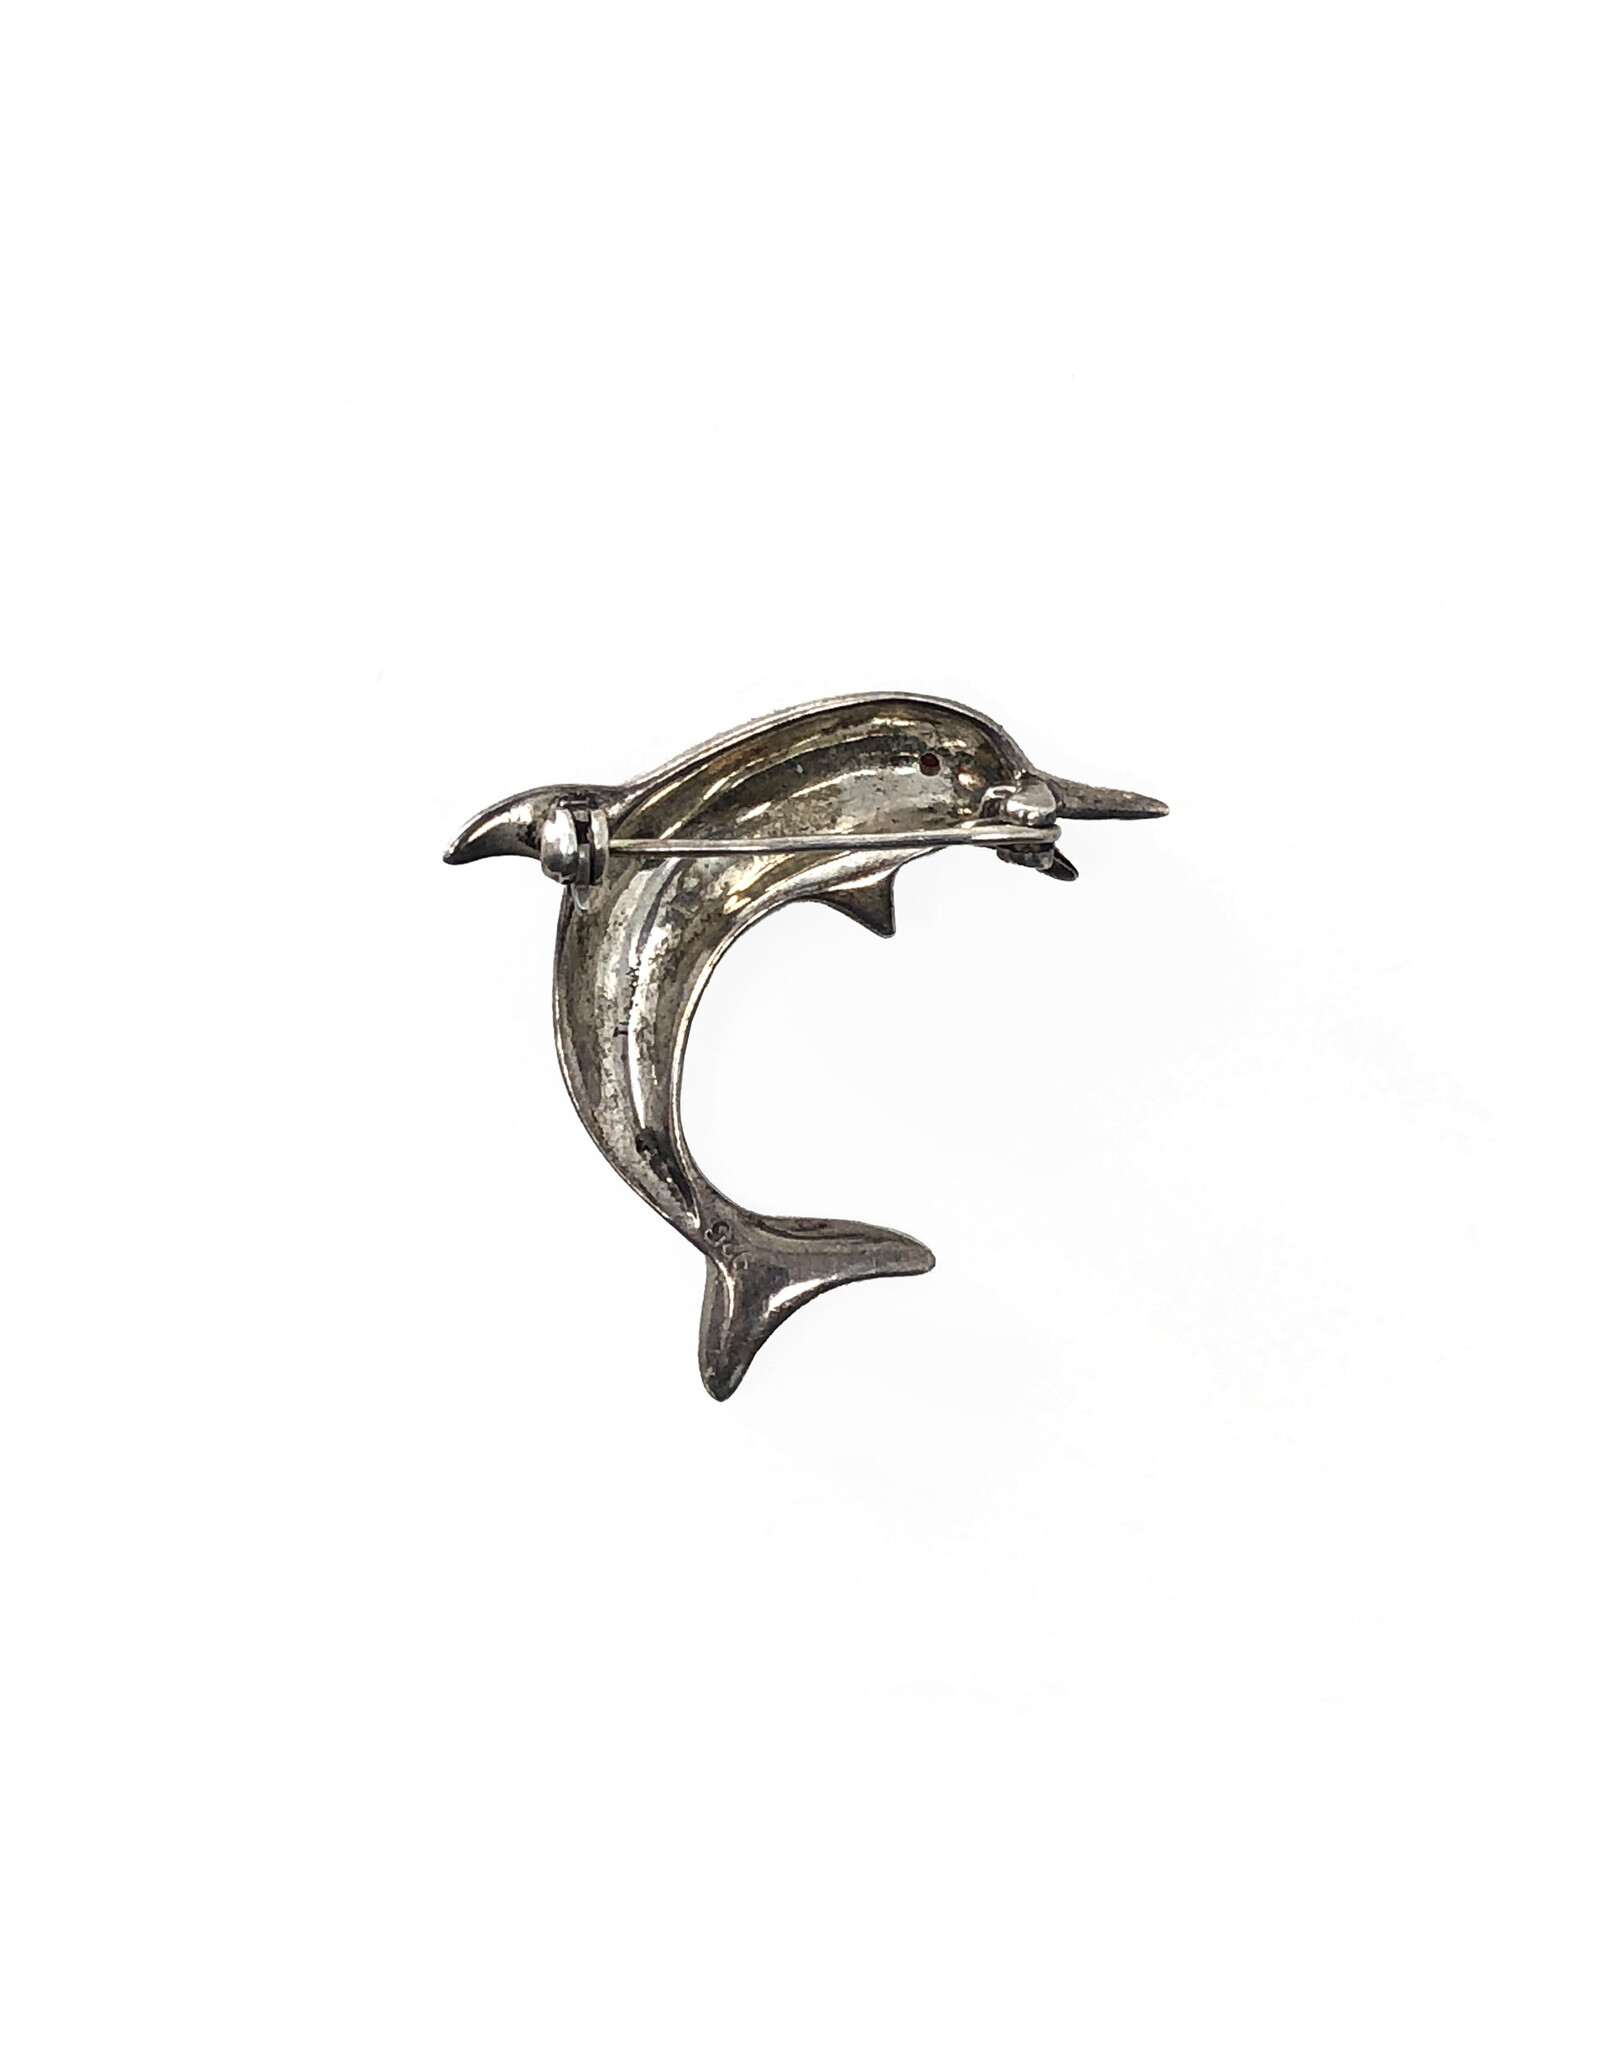 Marcasite-Studded Sterling Dolphin Brooch with Garnet Eye